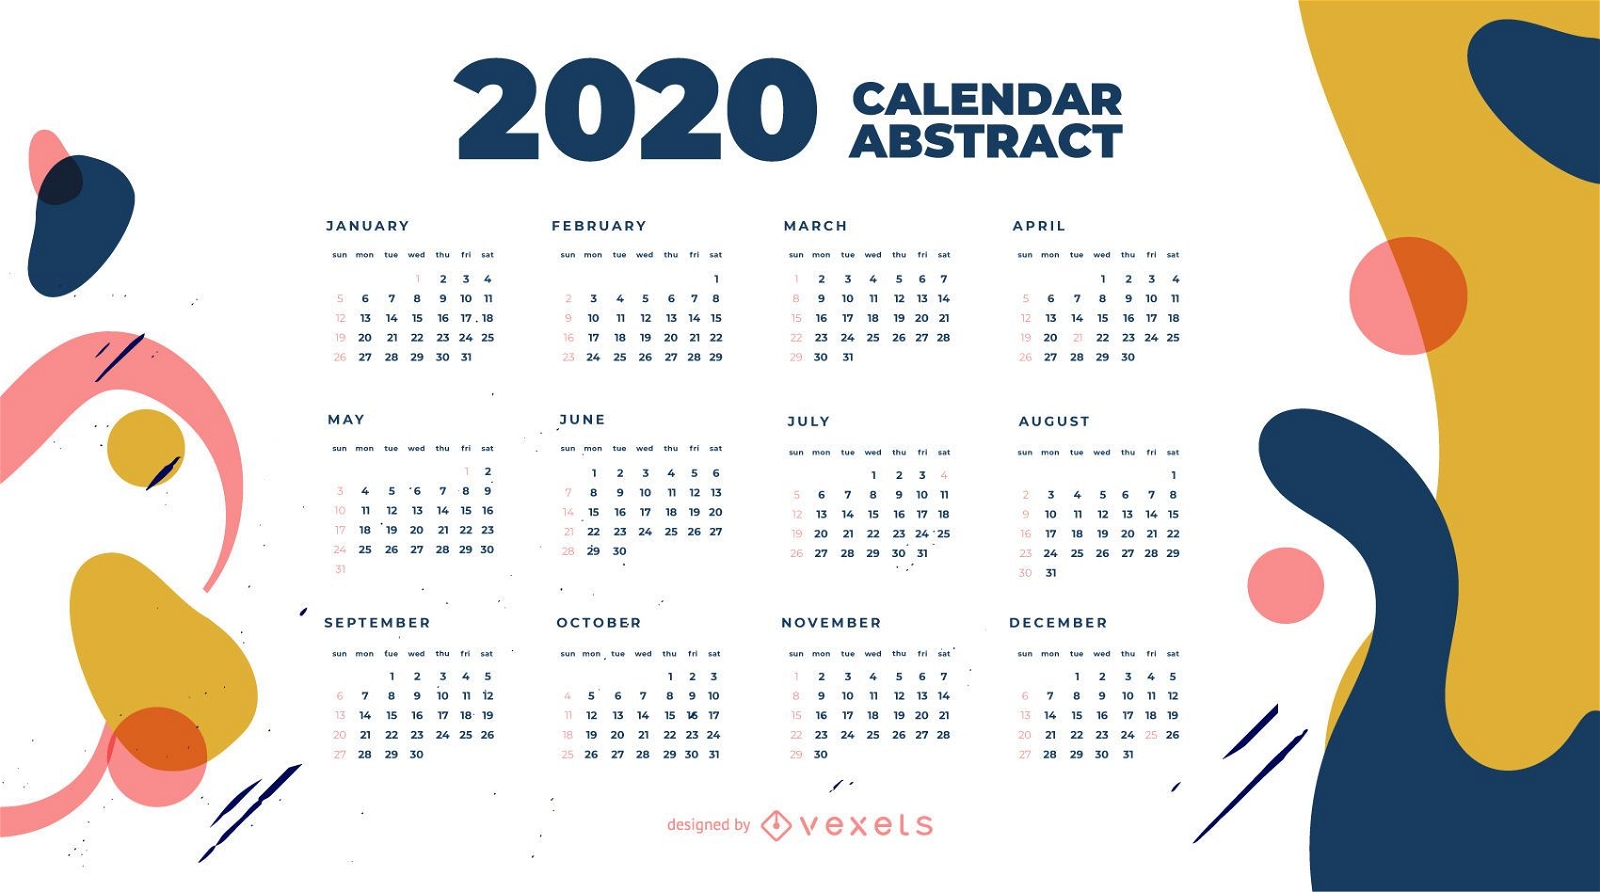 Jahr 2020 Abstract Calendar Design